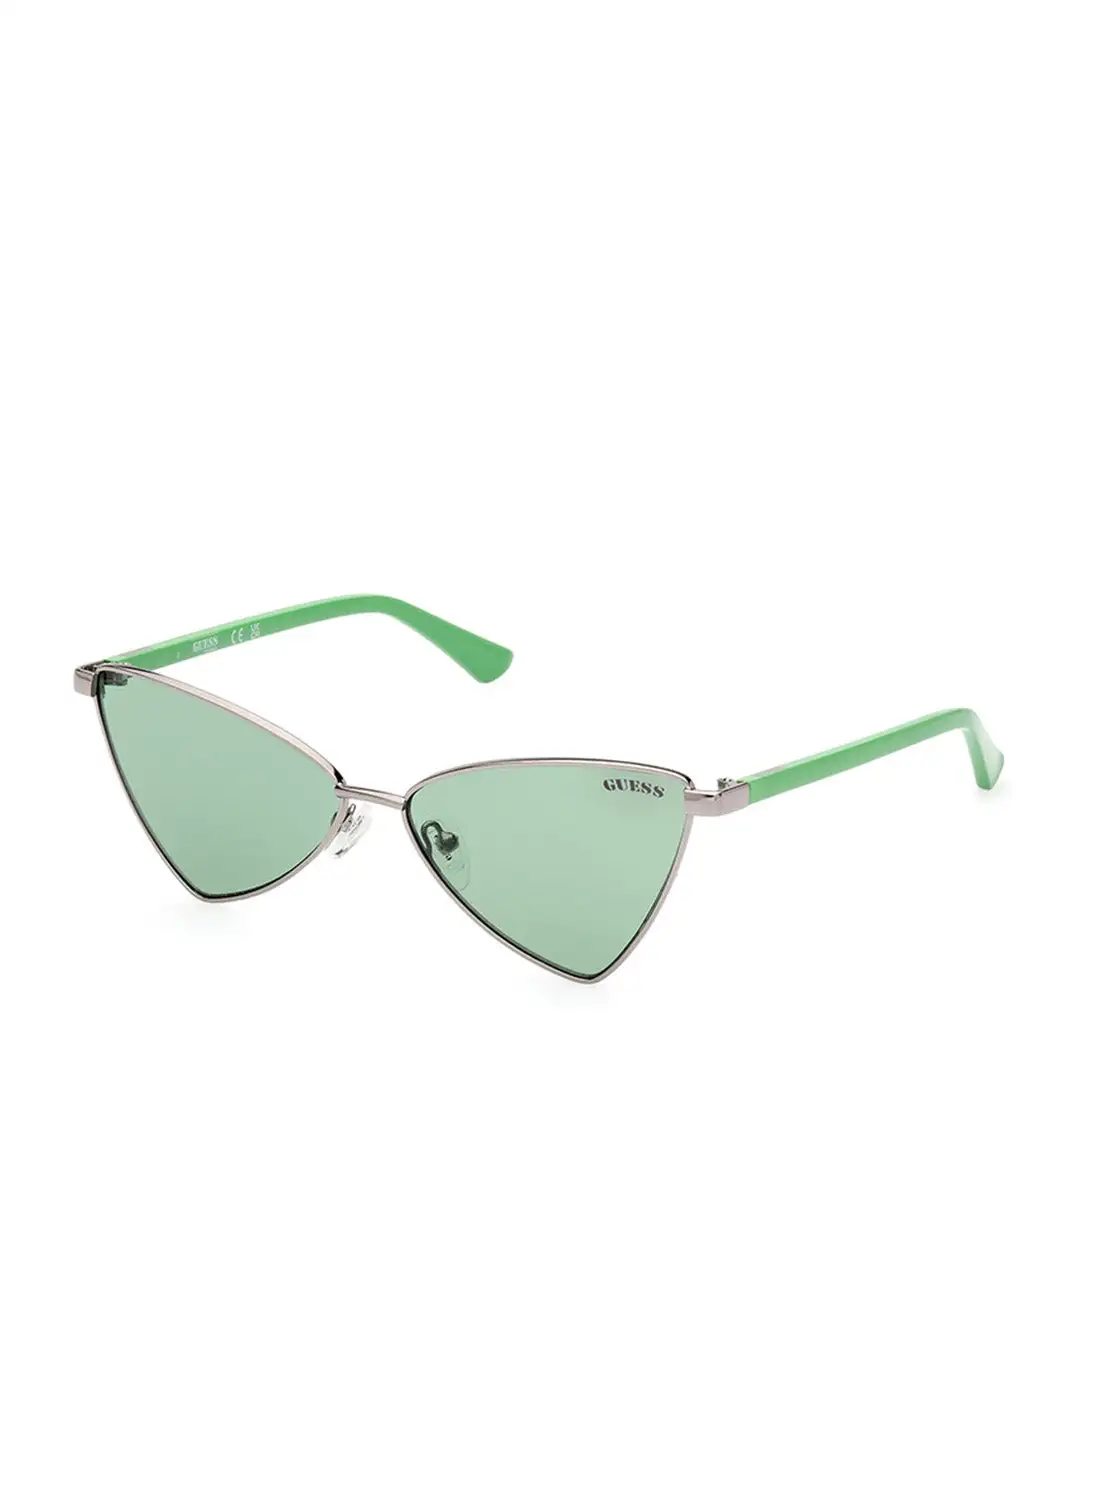 GUESS Women's UV Protection Asymmetrical Shape Sunglasses - GU828608N55 - Lens Size: 55 Mm